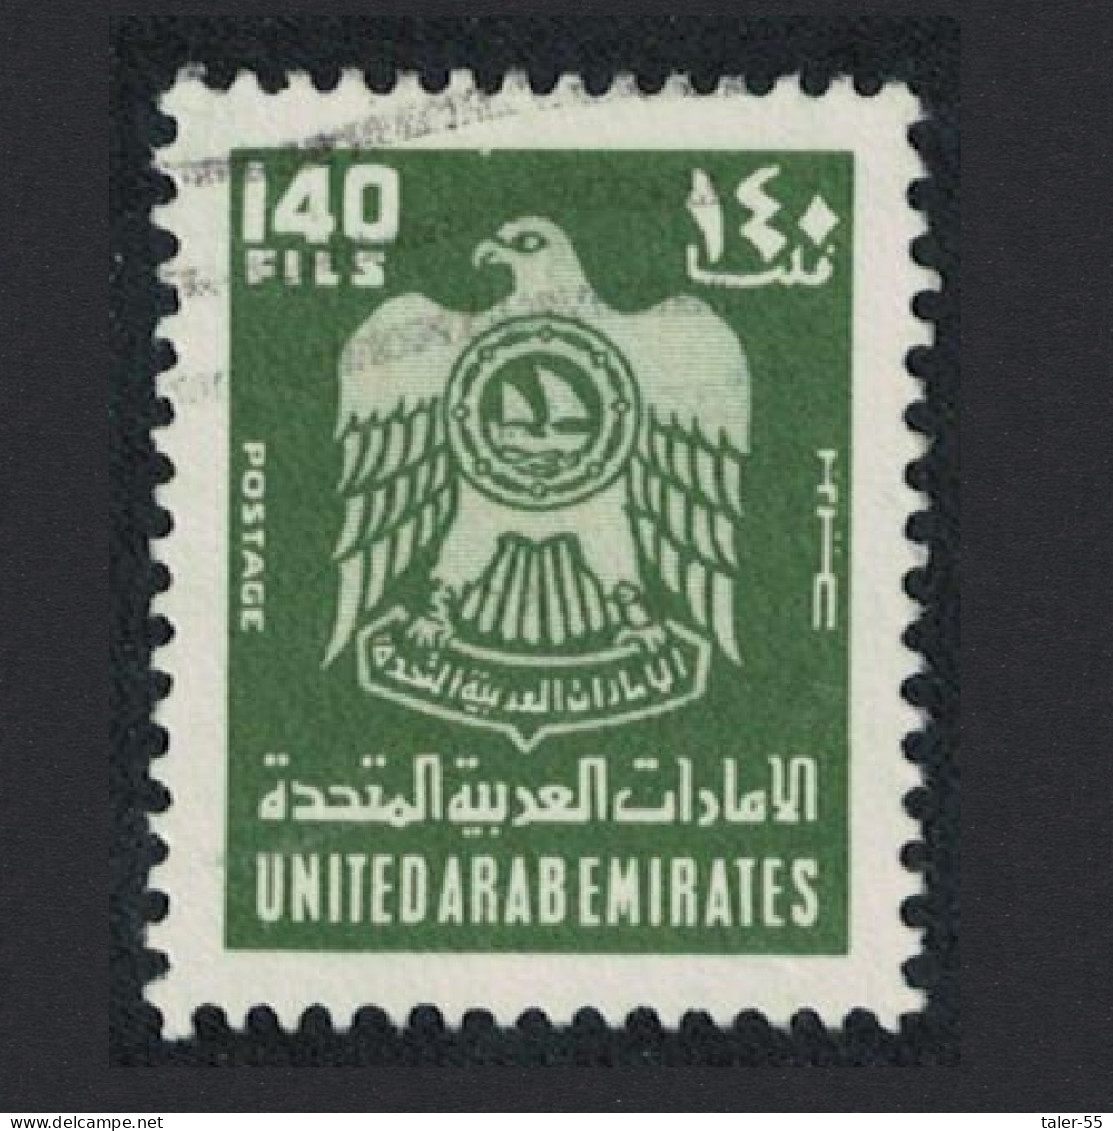 United Arab Emirates Crest Bird 140 Fils 1976 MNH SG#66 MI#66 - Emirats Arabes Unis (Général)